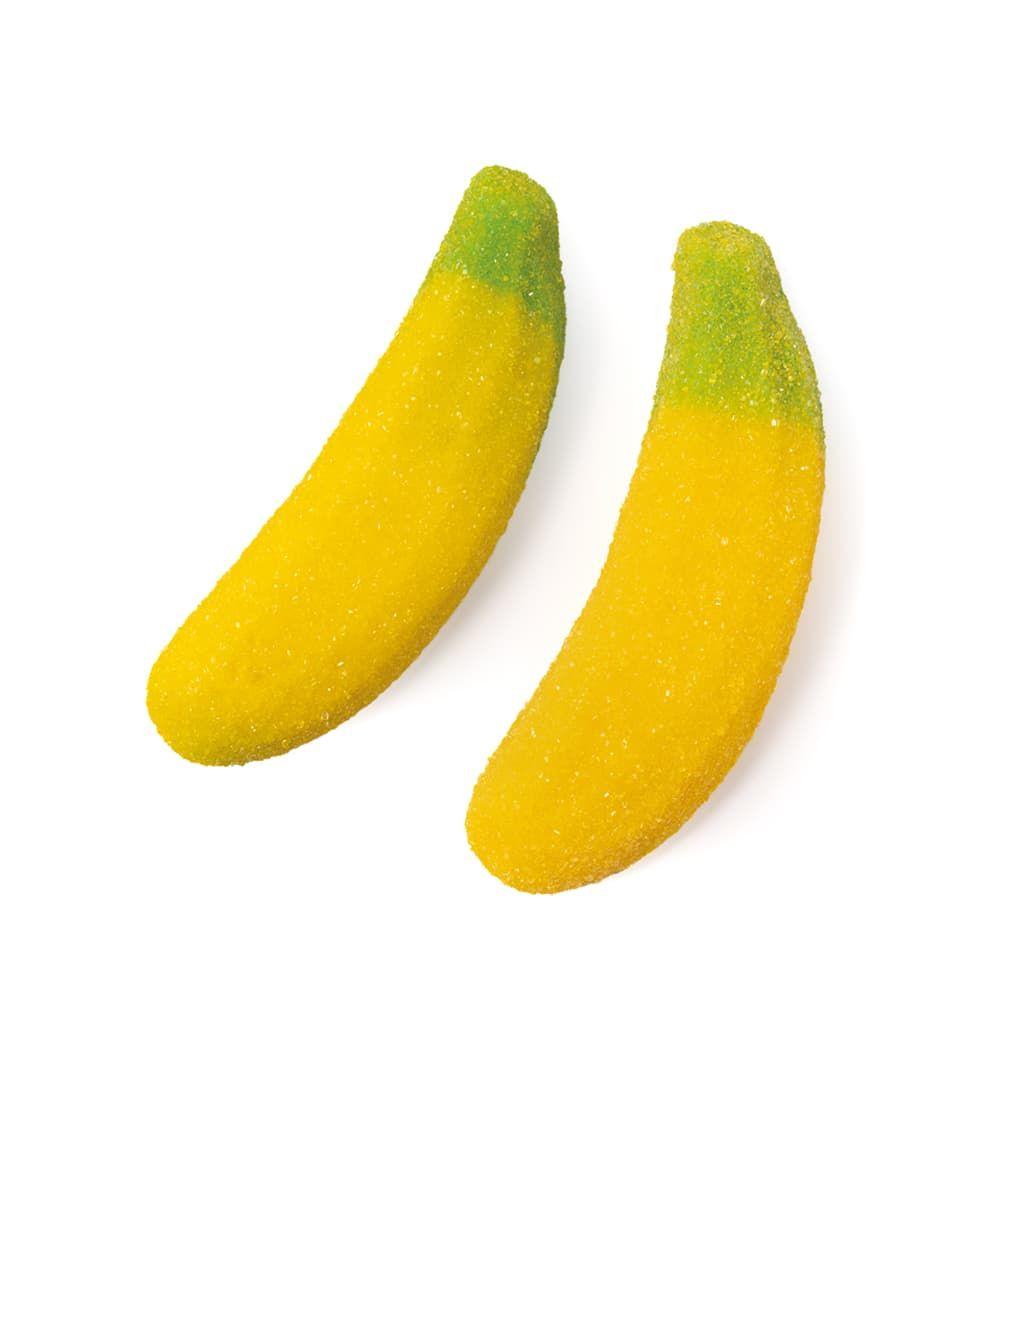 Caramelle Gommose Ripiene Banane Rellenas